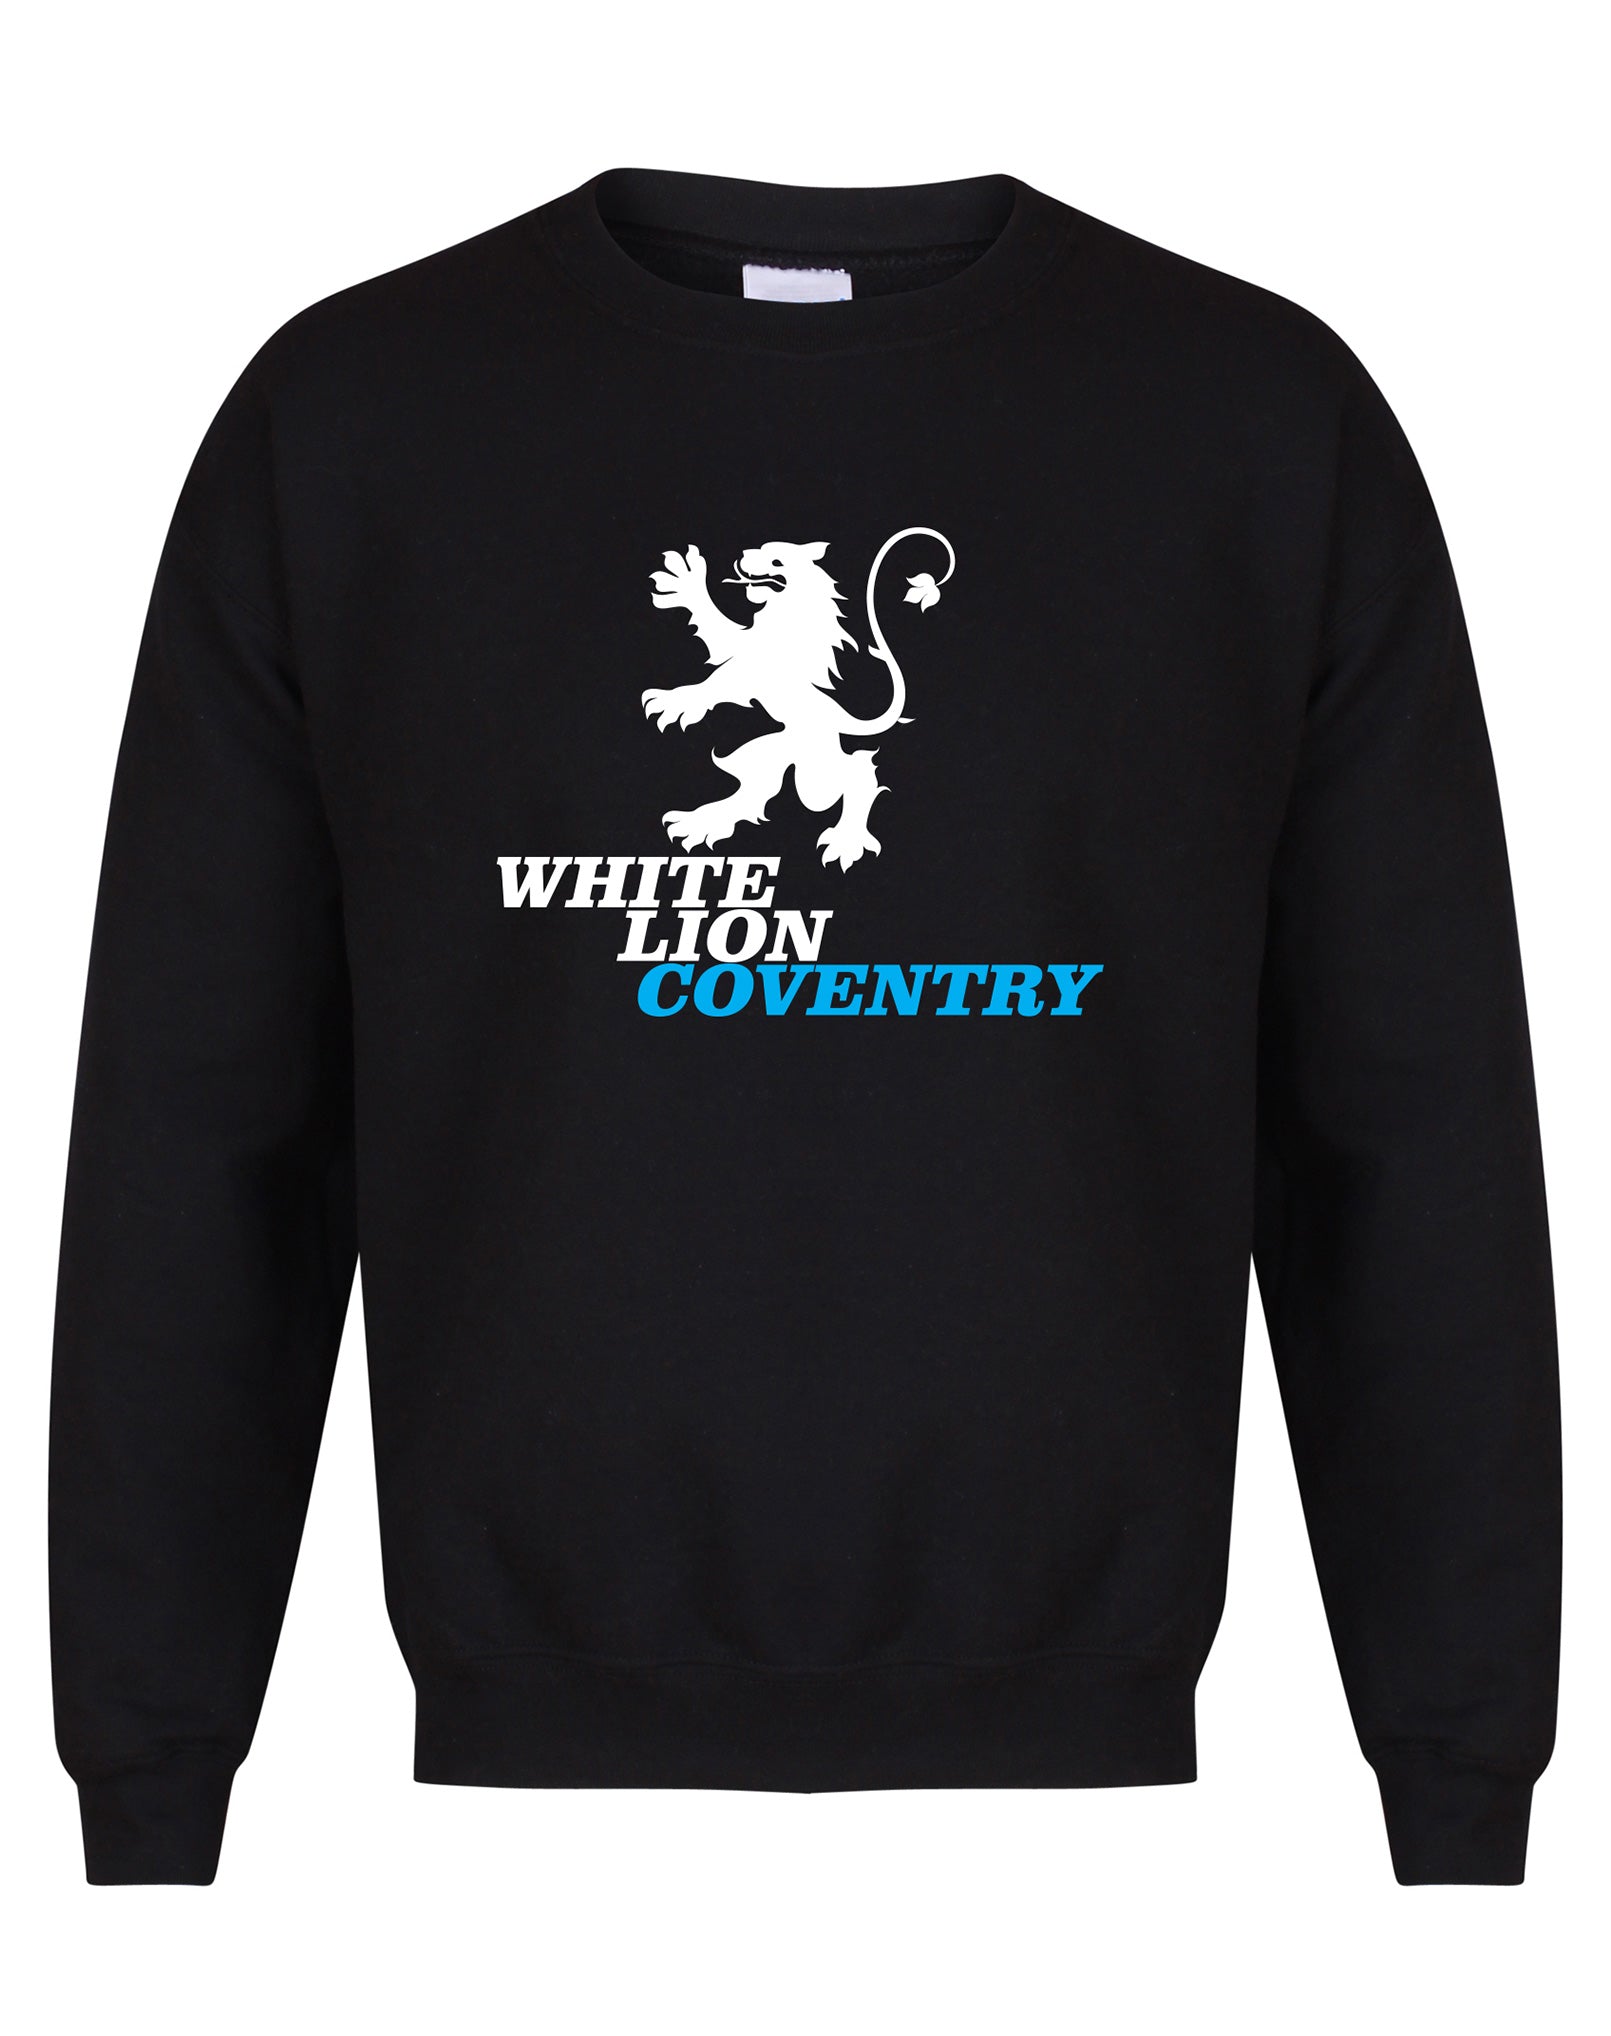 White Lion unisex fit sweatshirt - various colours - Dirty Stop Outs